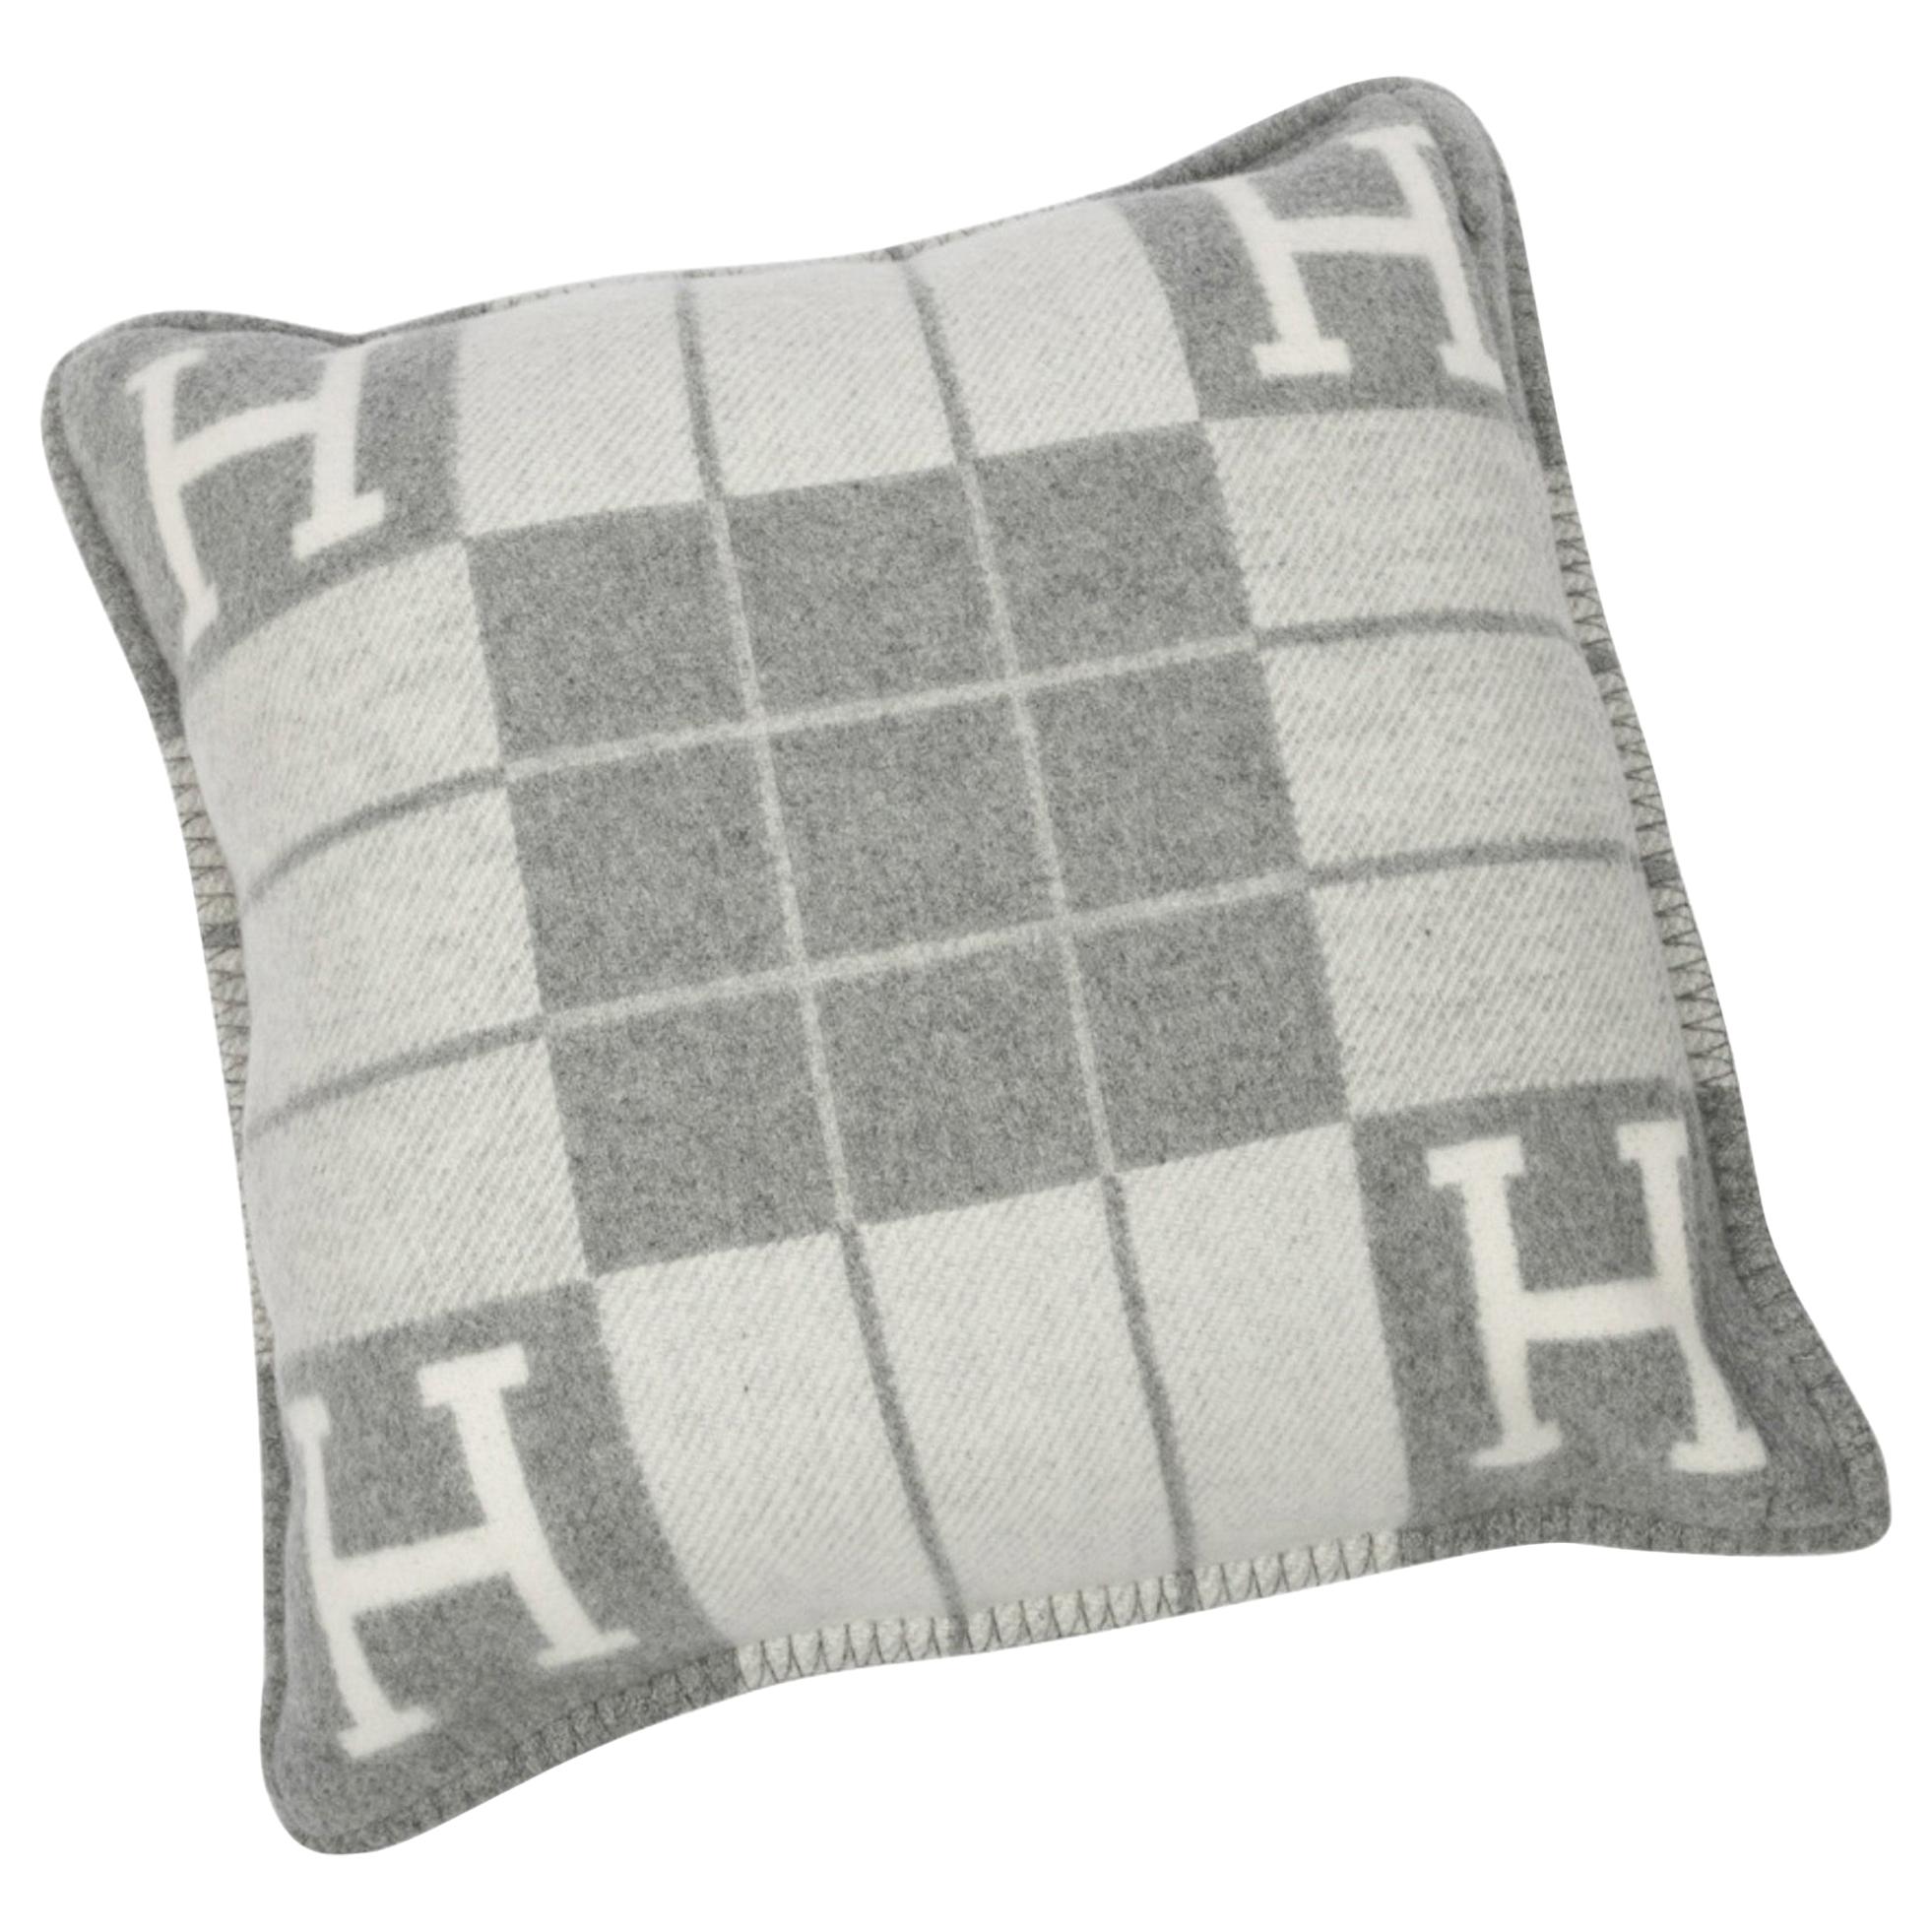 hermes pillows